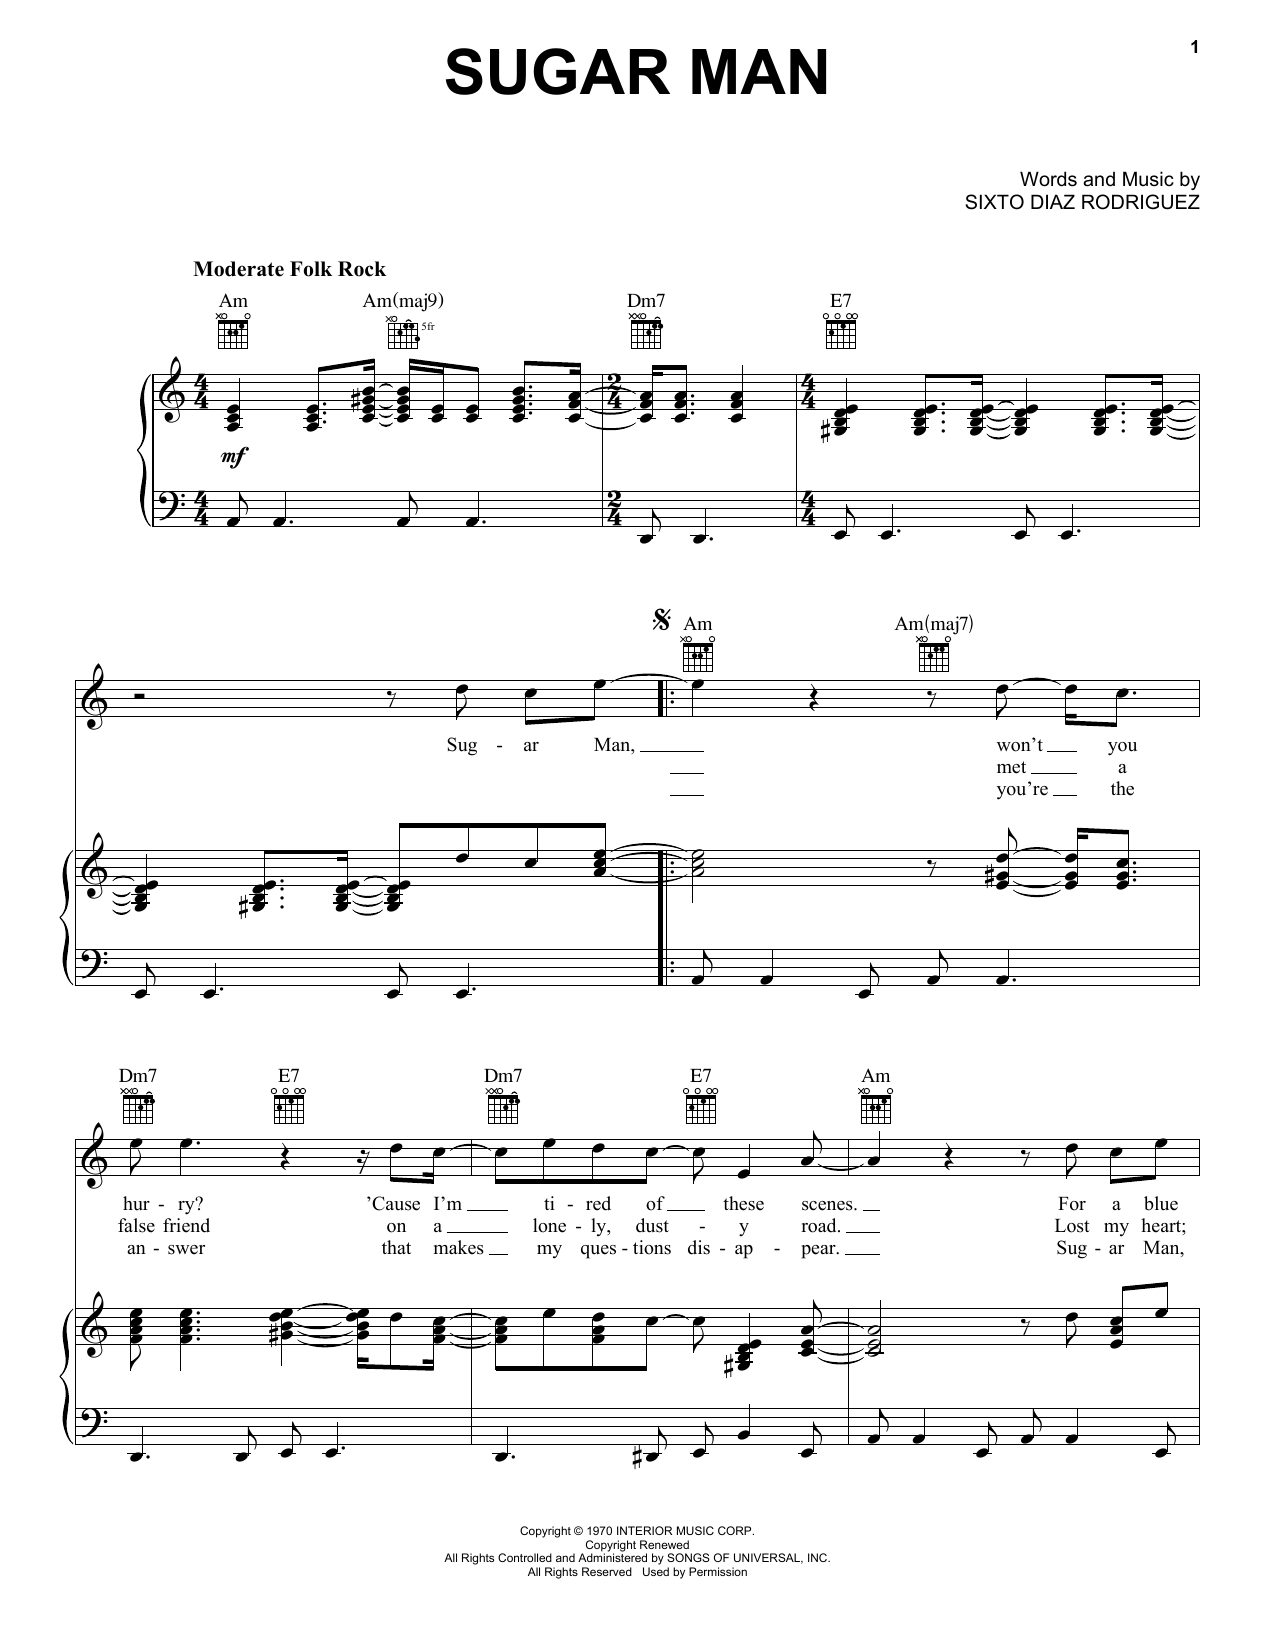 Rodriguez Sugar Man Sheet Music Notes & Chords for Ukulele - Download or Print PDF